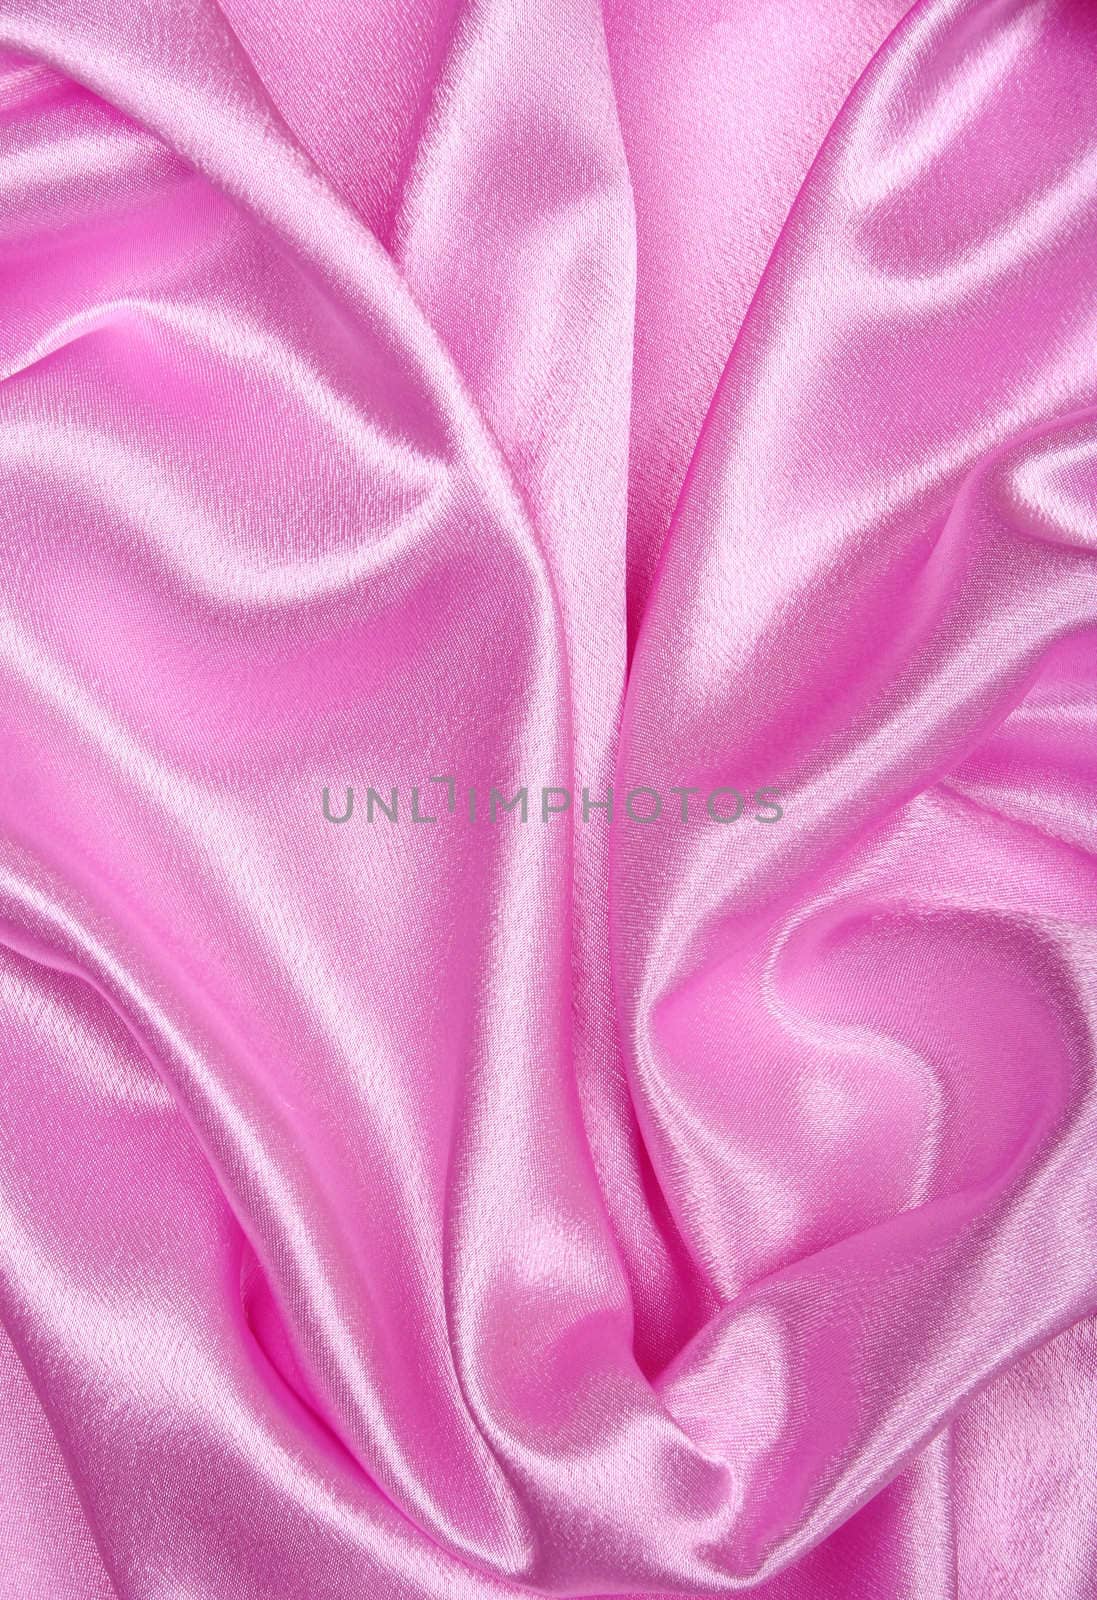 Smooth elegant pink silk as background 